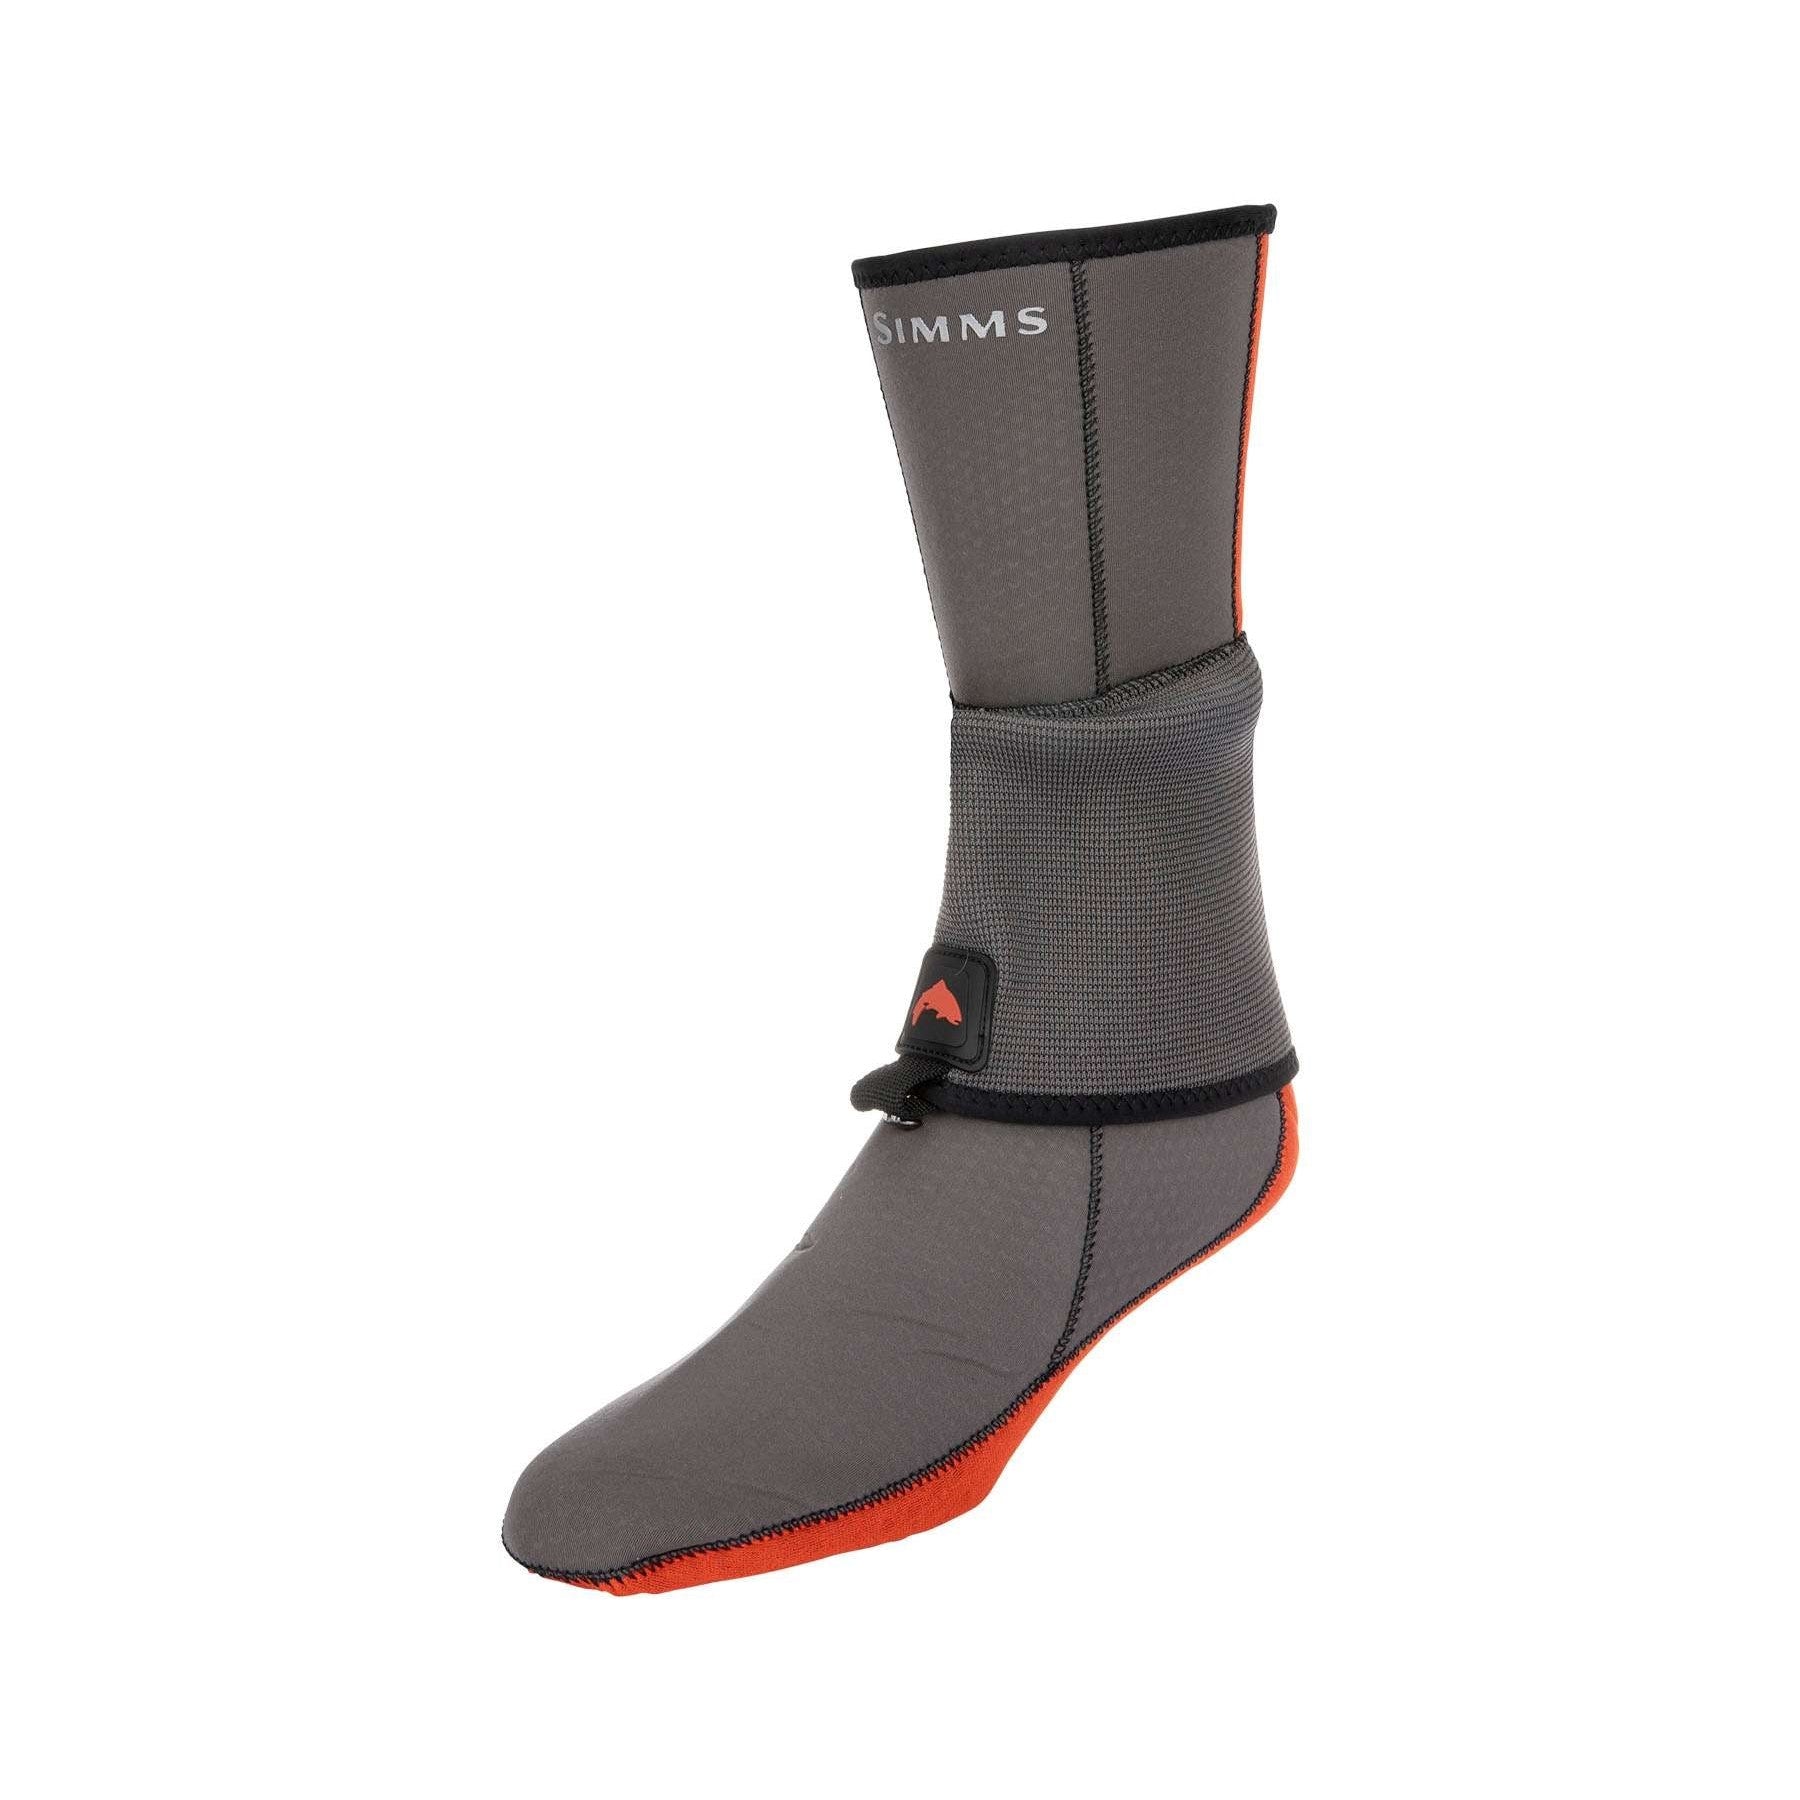 Simms Flyweight Neoprene Wet Wading Sock - Pewter